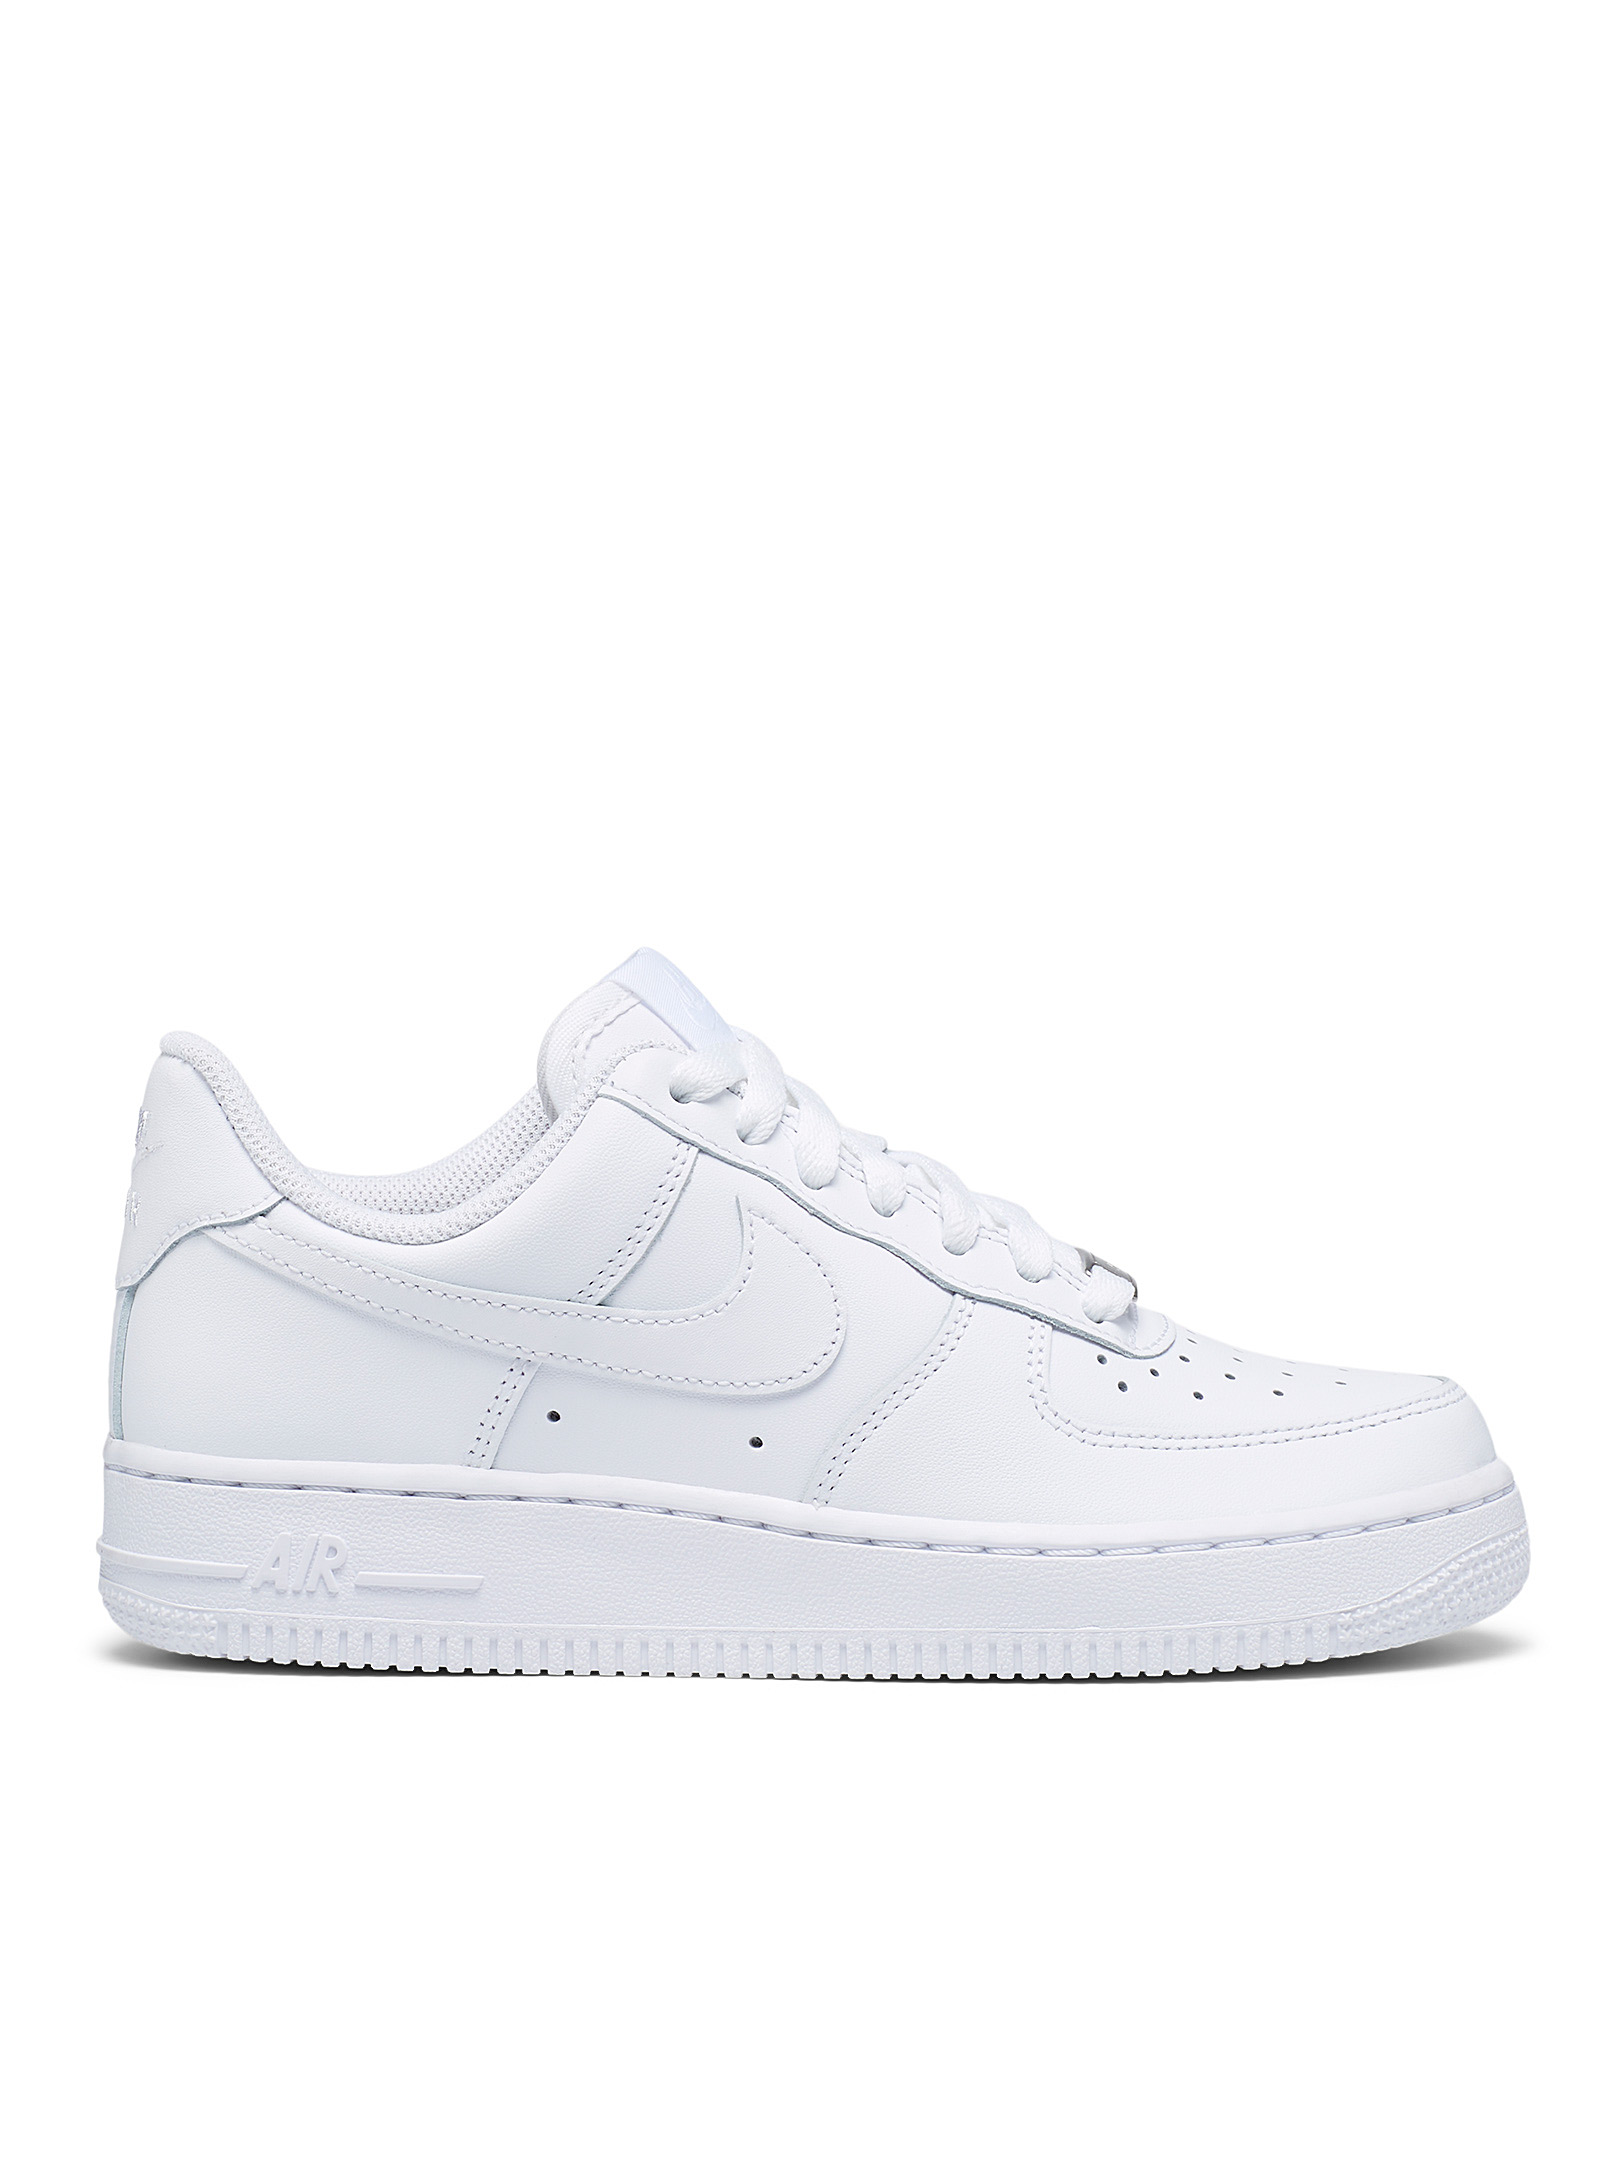 Nike Air Force 1 '07 White Sneakers Women